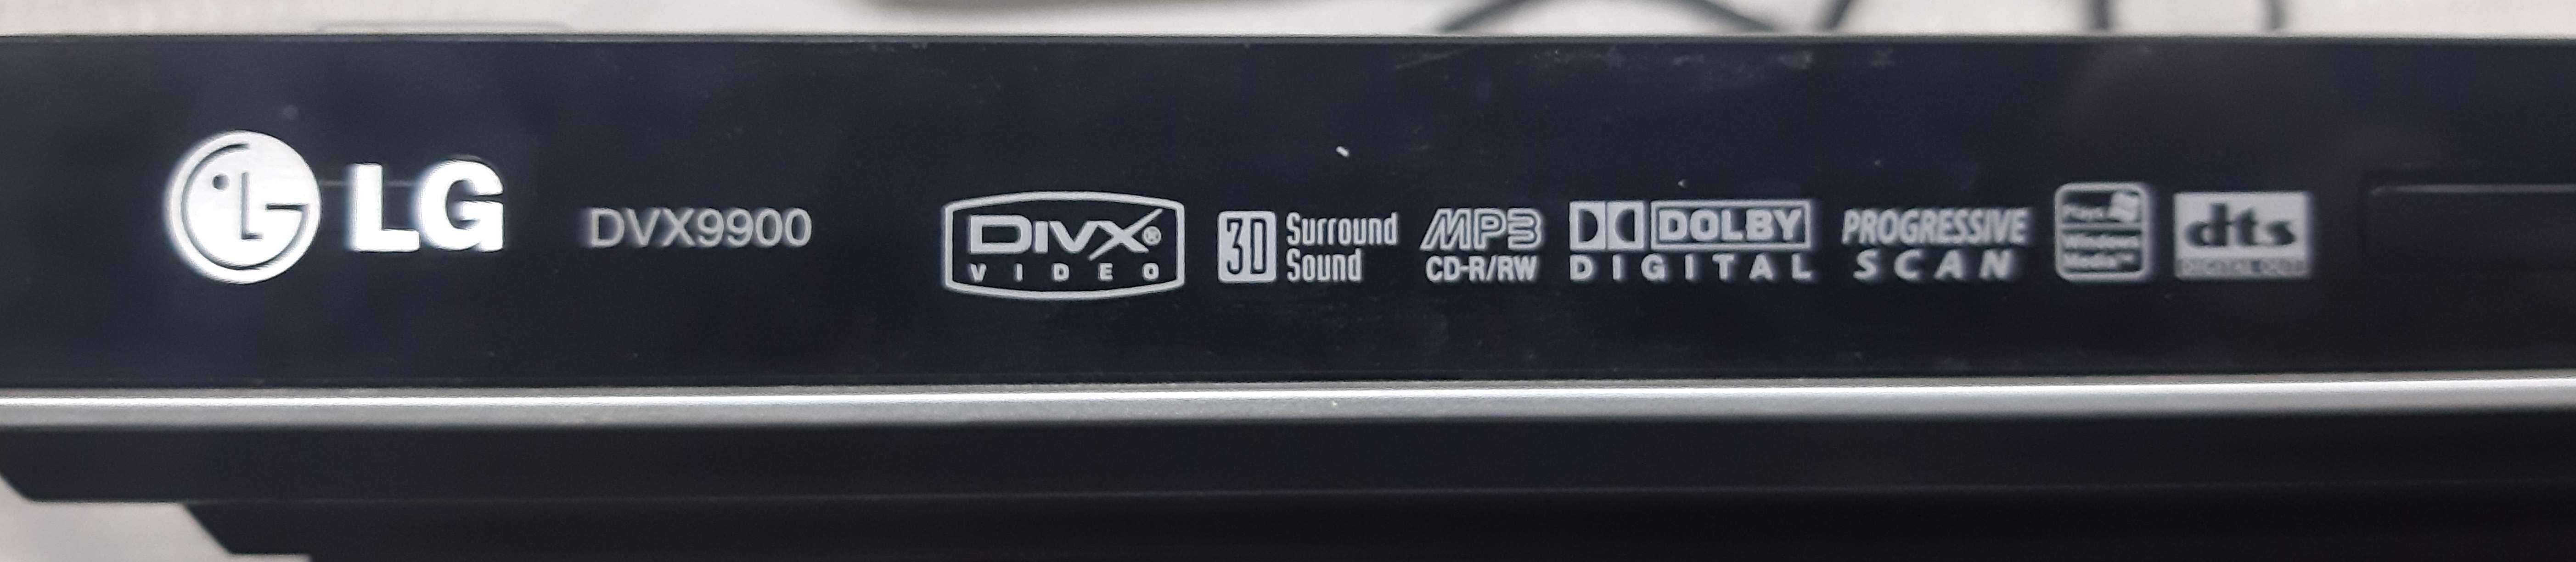 DVD Player LG DVX9900